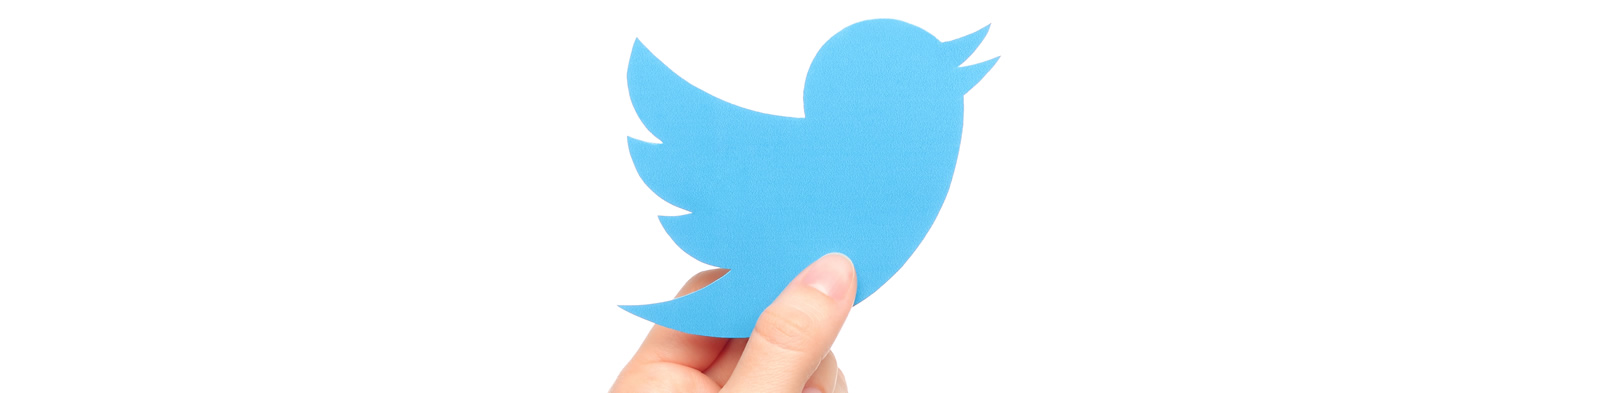 Twitter logo held aloft